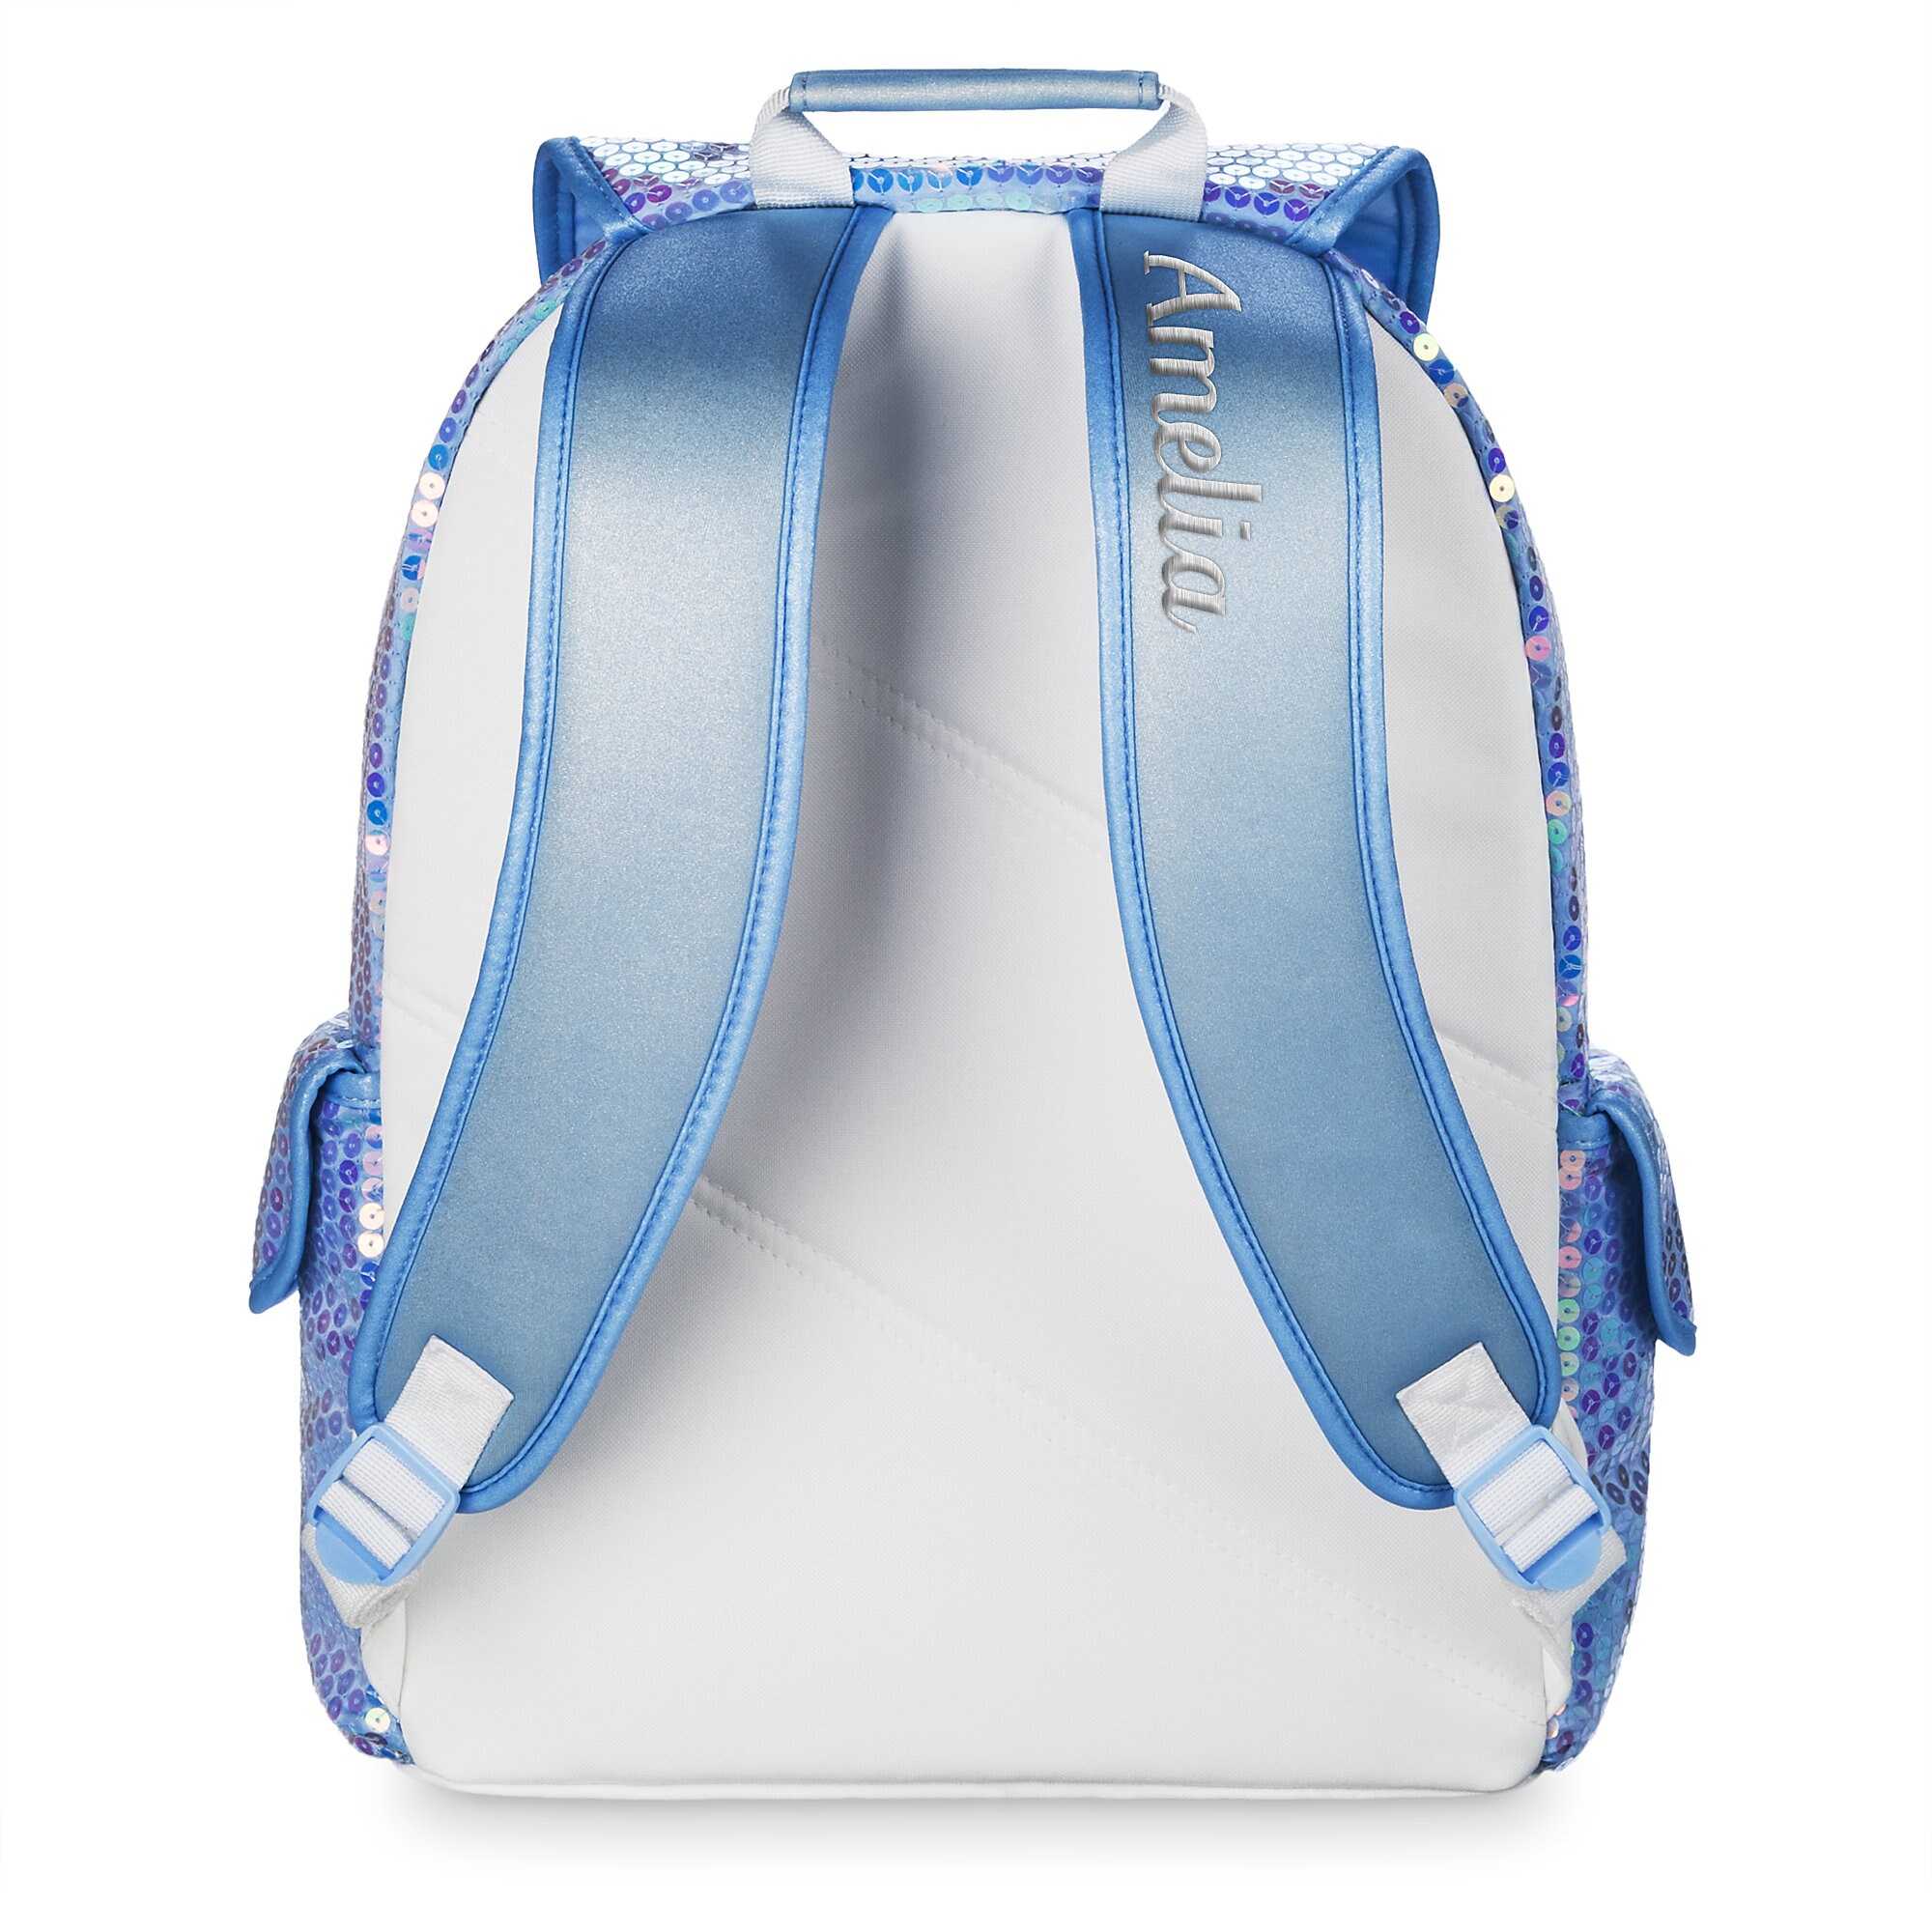 Elsa Backpack for Kids - Frozen - Personalized